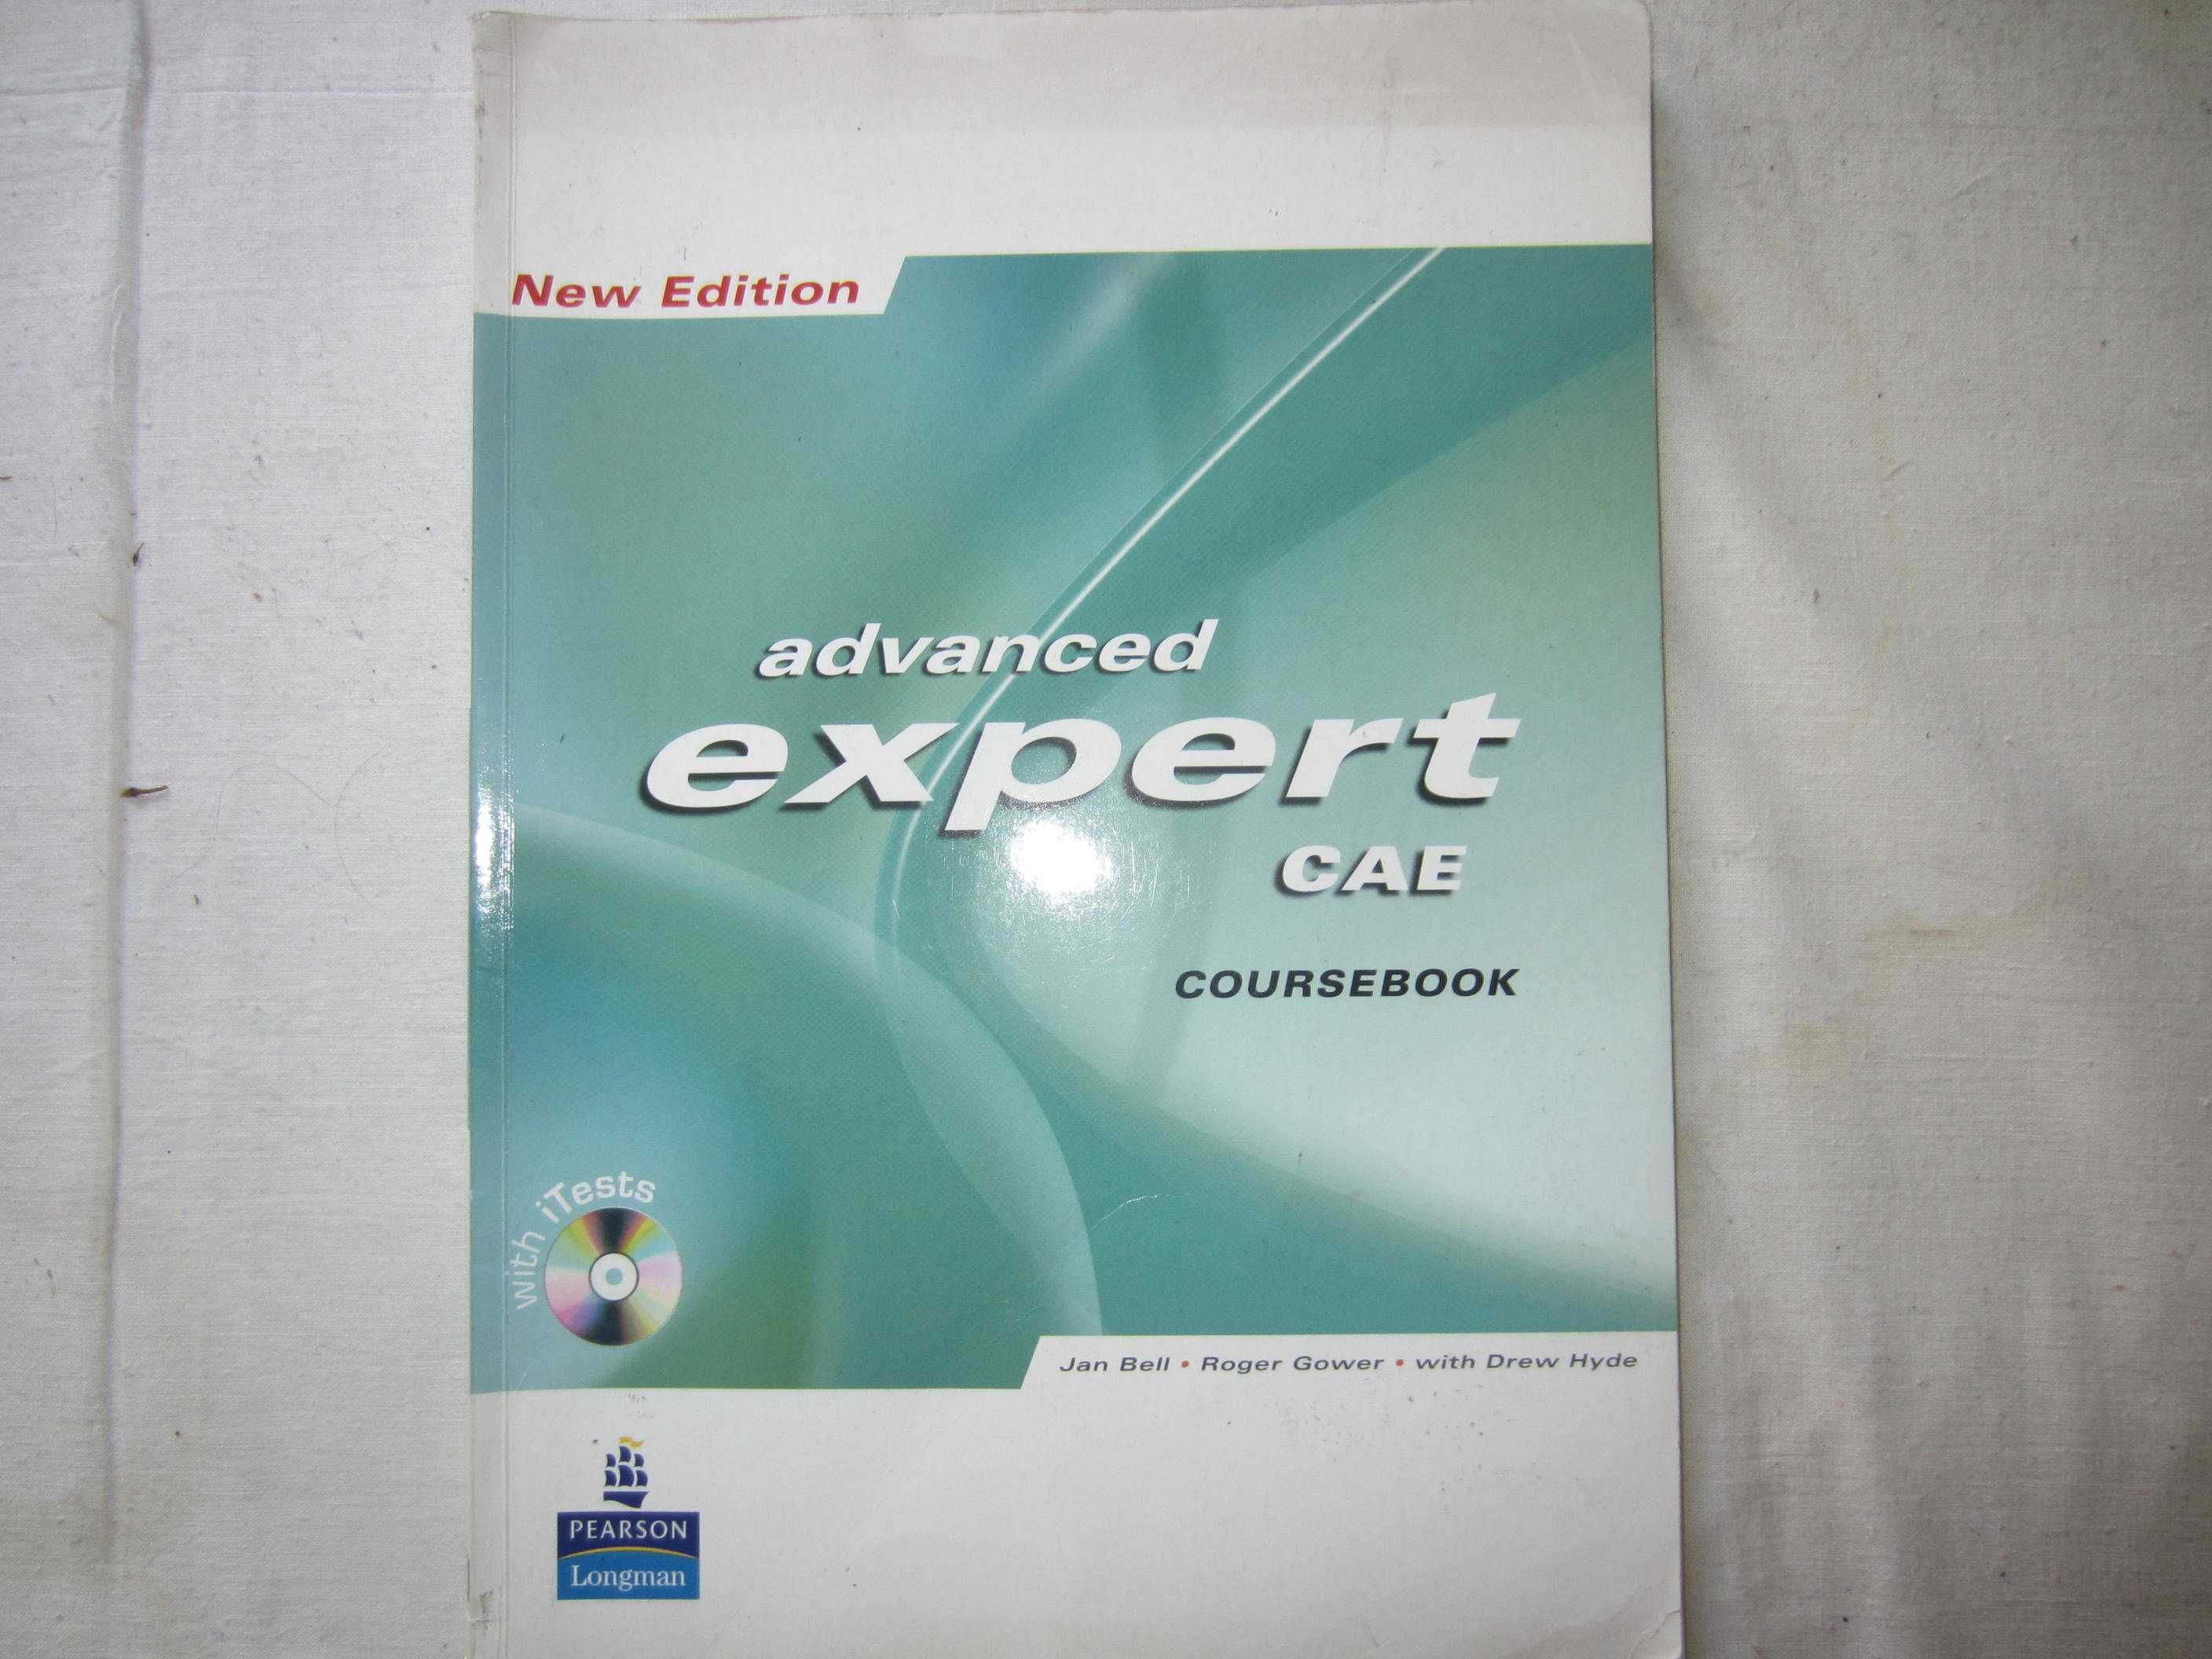 Curs engleza Advanced Expert CAE  - Pearson - Longman